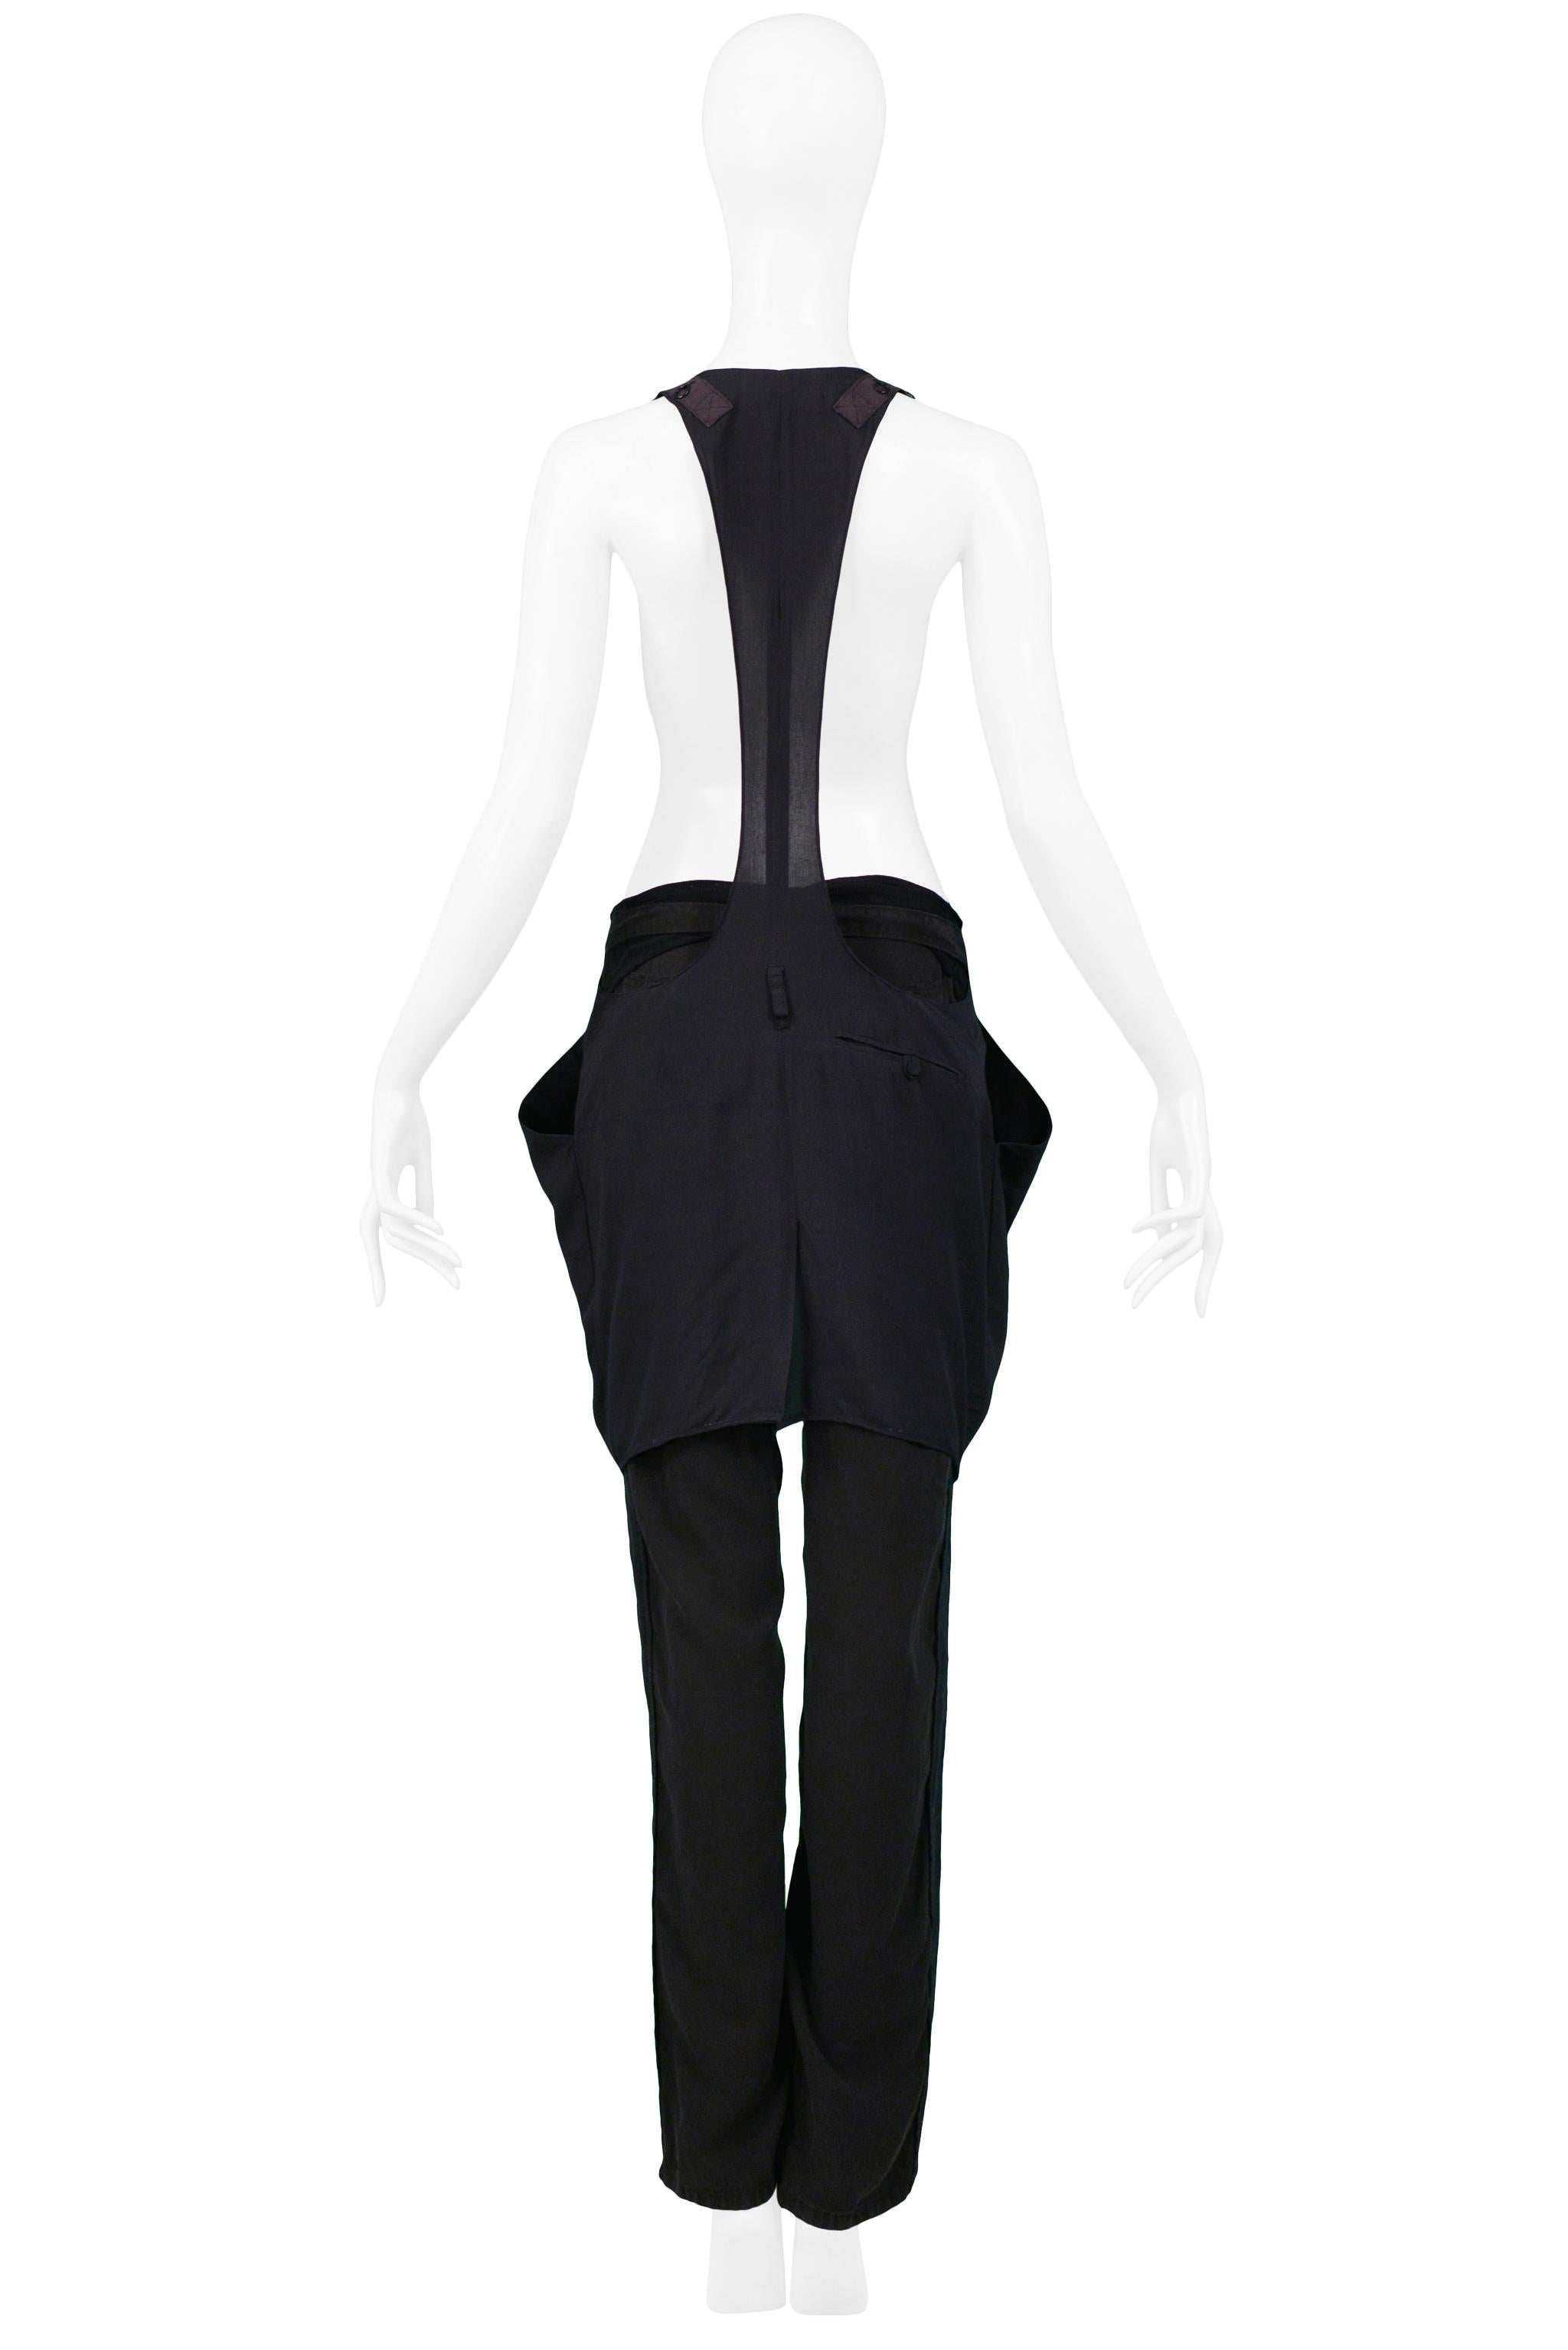 Rare & Iconic Balenciaga by Nicolas Ghesquiere Corset Vest Top 2002 For Sale 2